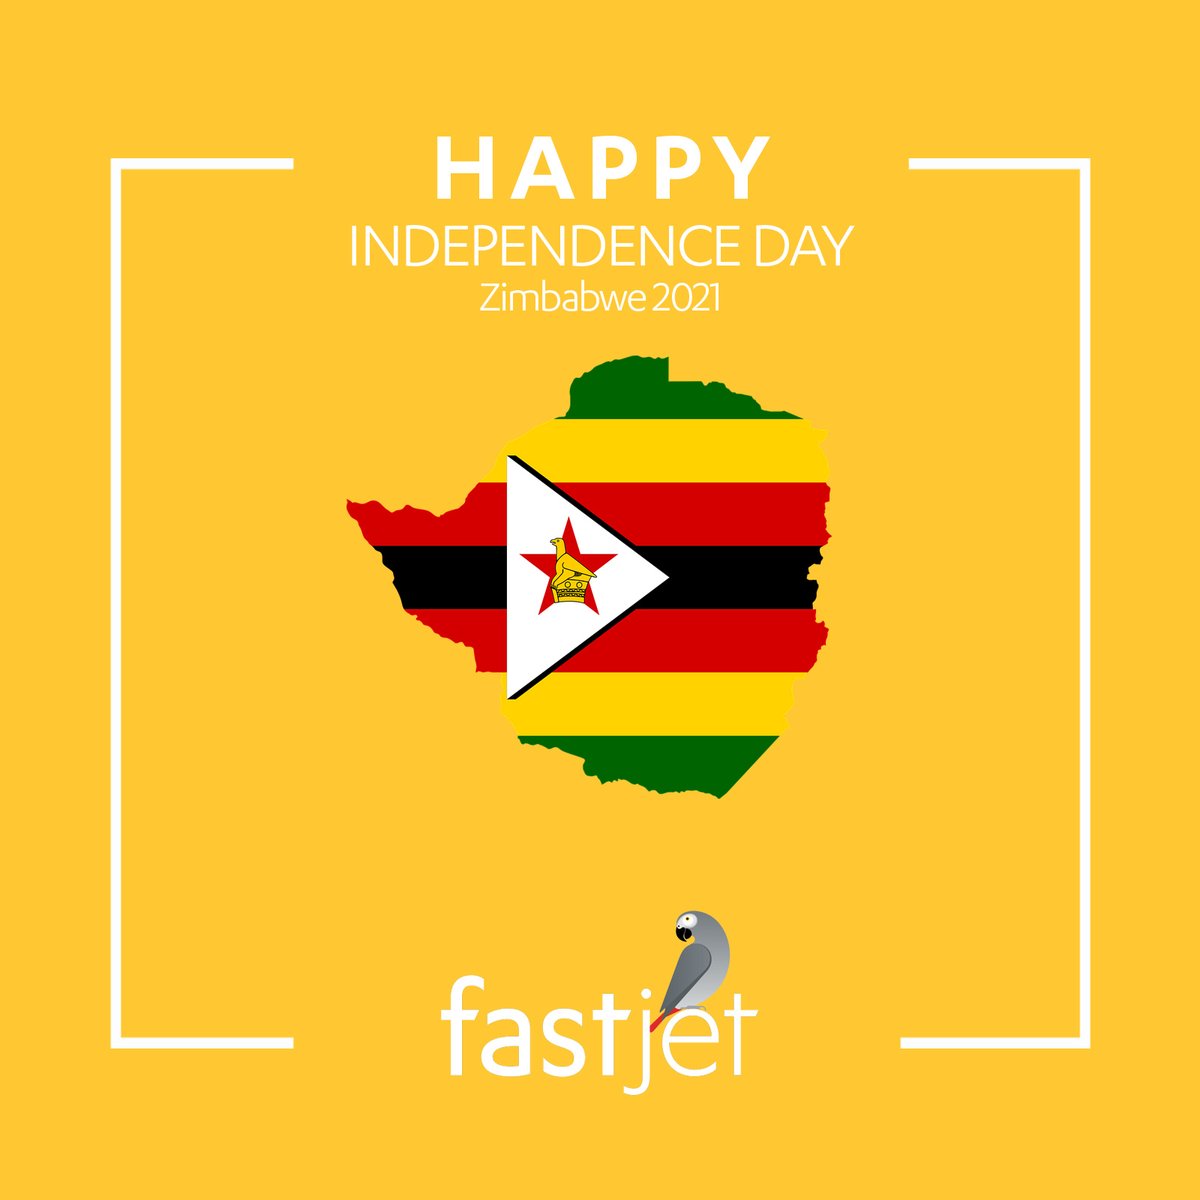 Happy Independence Day, Zimbabwe 2021.
Stay Safe and Enjoy
#IndependenceDay #Zimbabwe
#StaySafe #Peace #Prosperity
#ZimAt41 #Travel #Harare
#VictoriaFalls #Bulawayo #AWorldofWonders